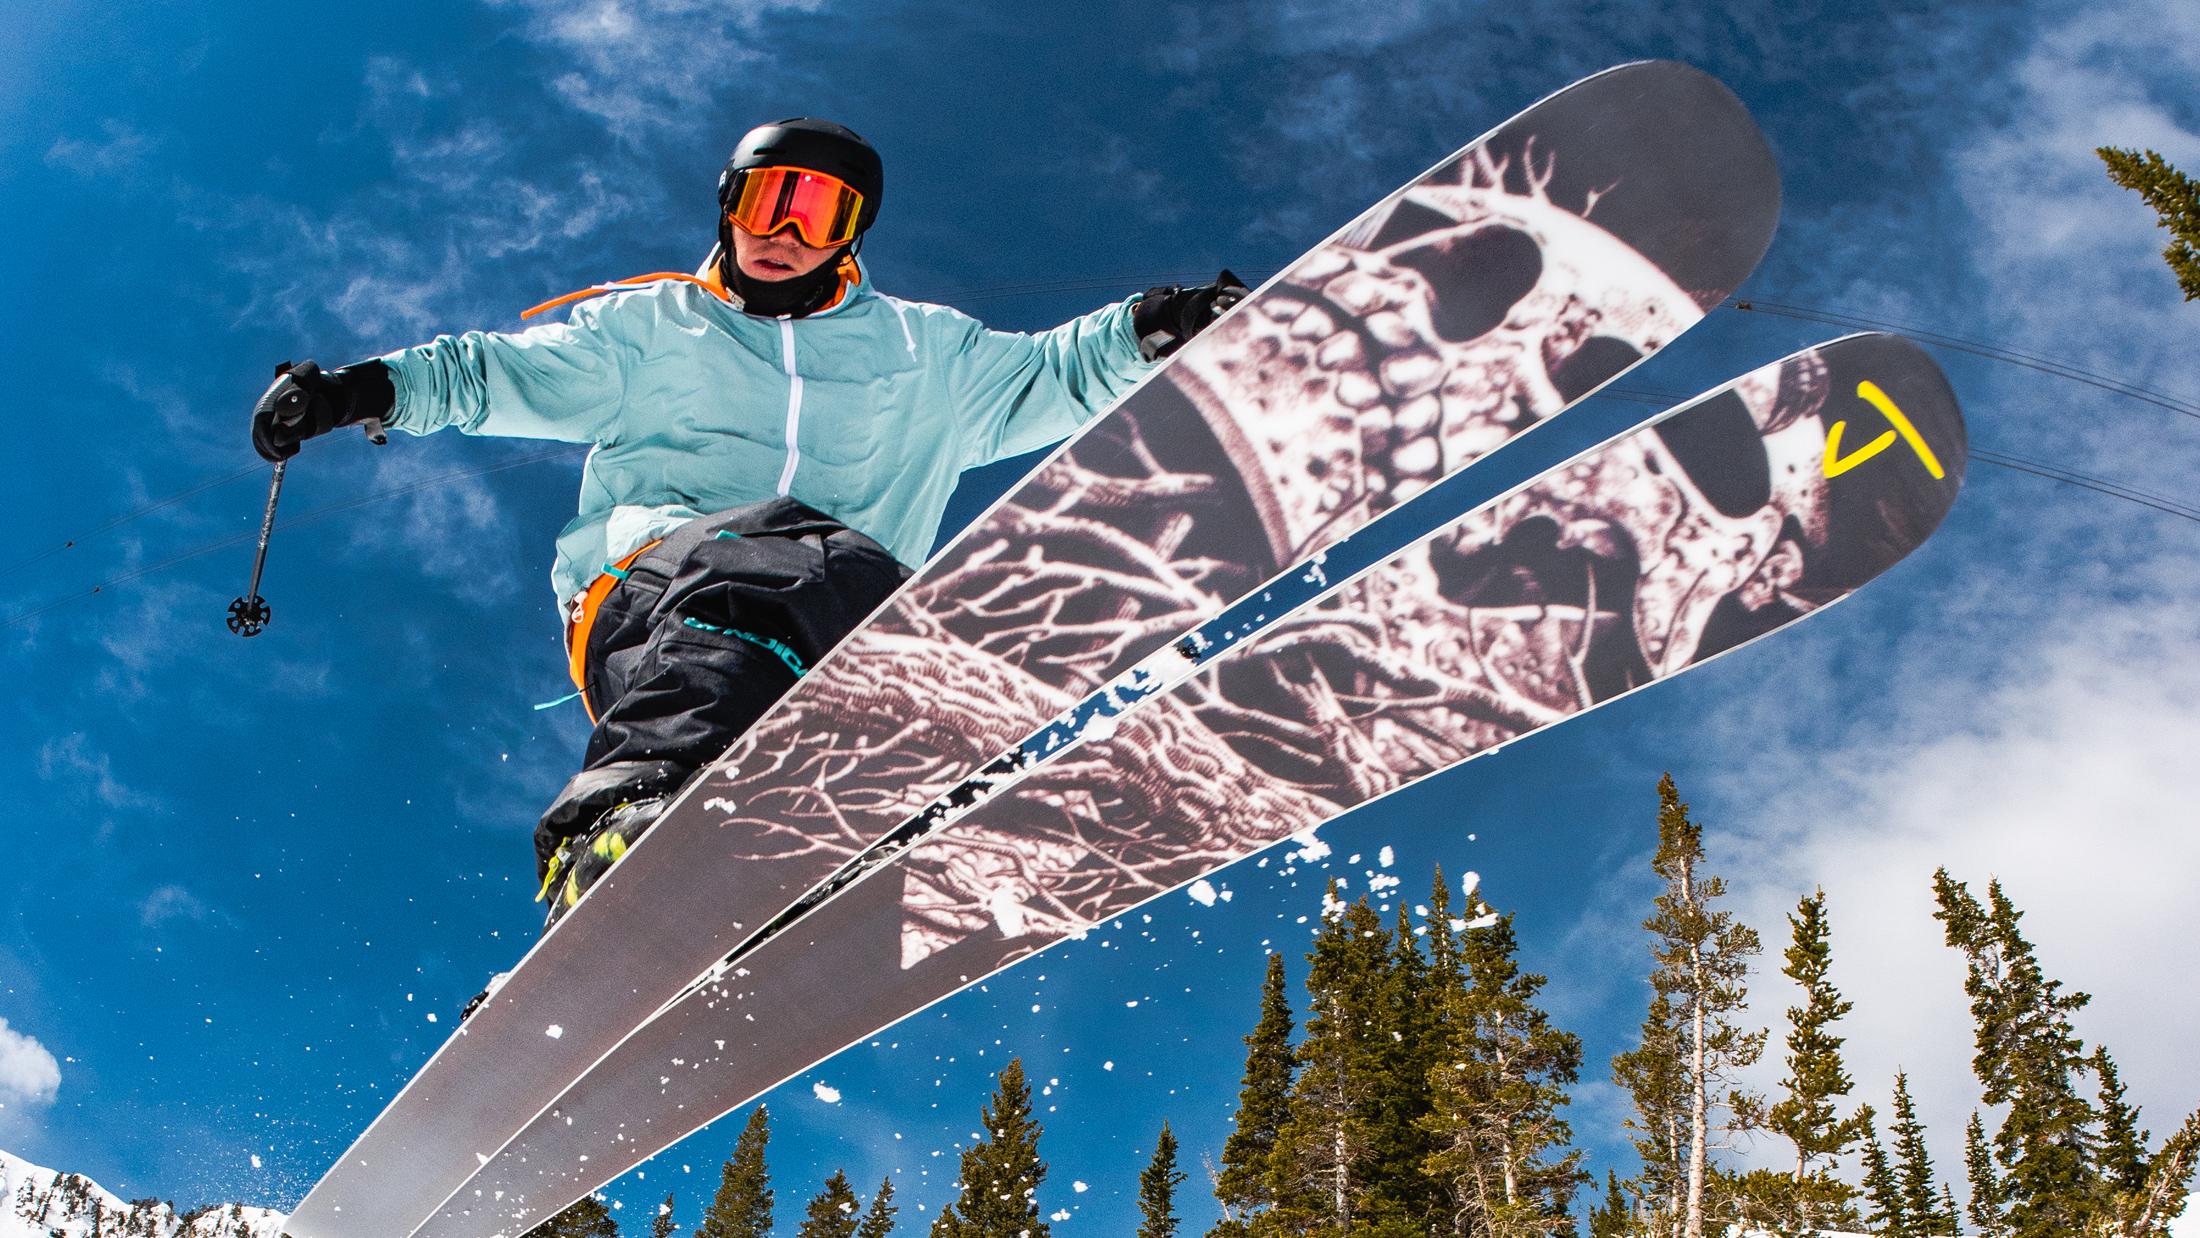 The Hotshot "NEVERMORE" Gilang Sahara x J Collab Limited Edition Ski Shredding Image